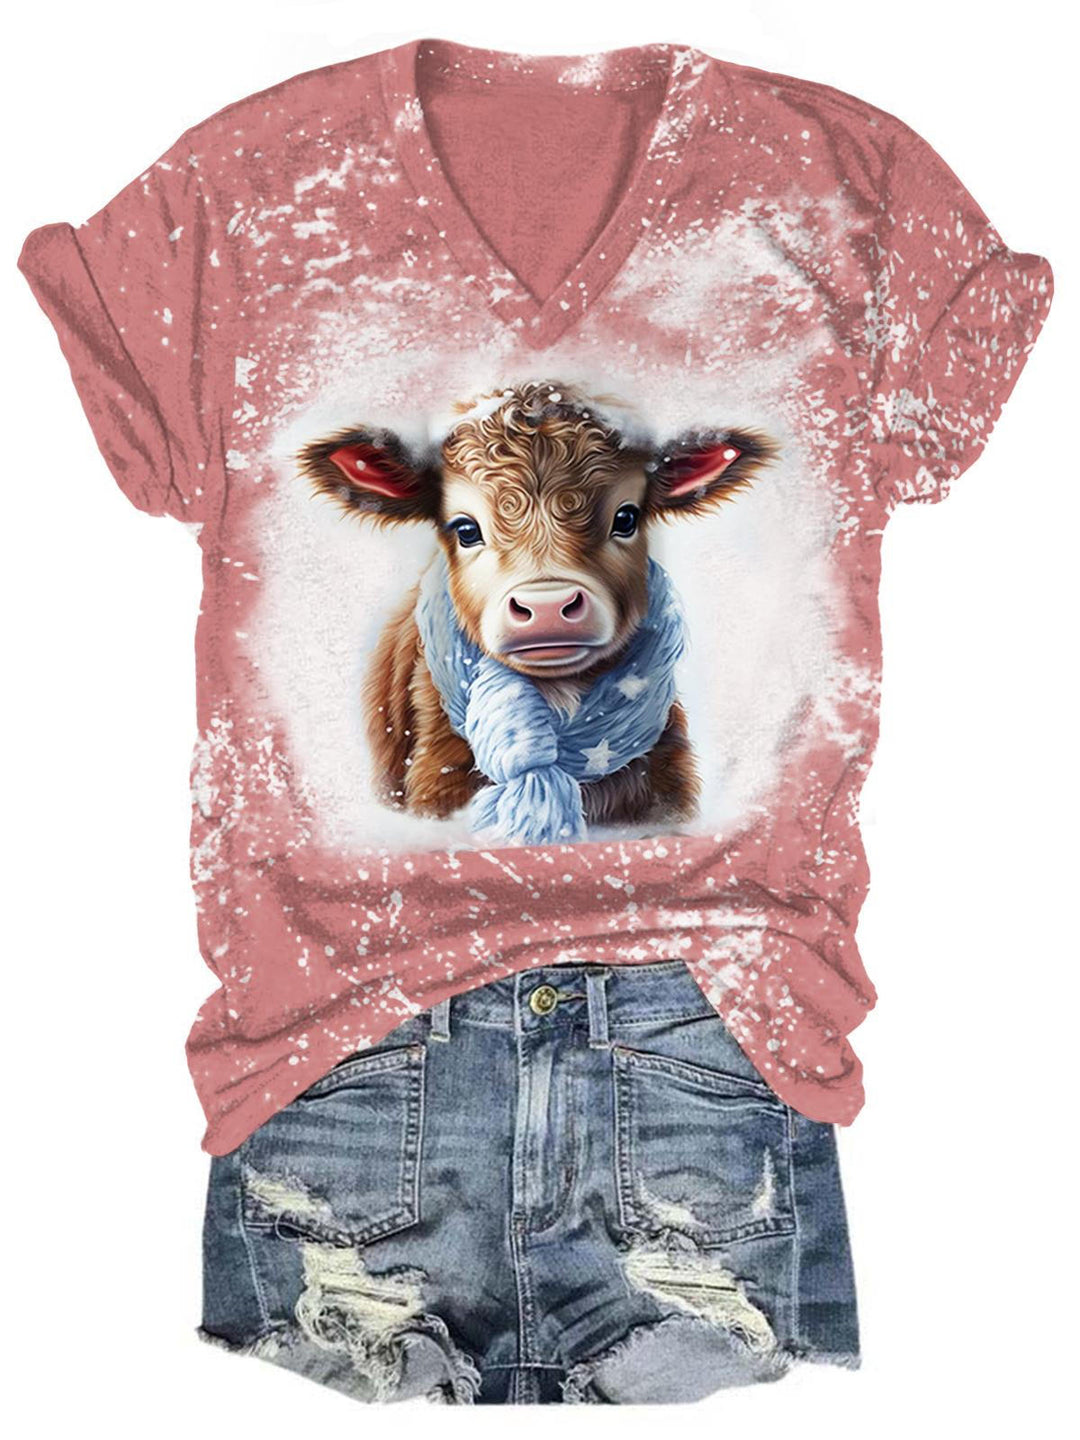 Women's Winter Cow Tie Dye Print Short Sleeve Top